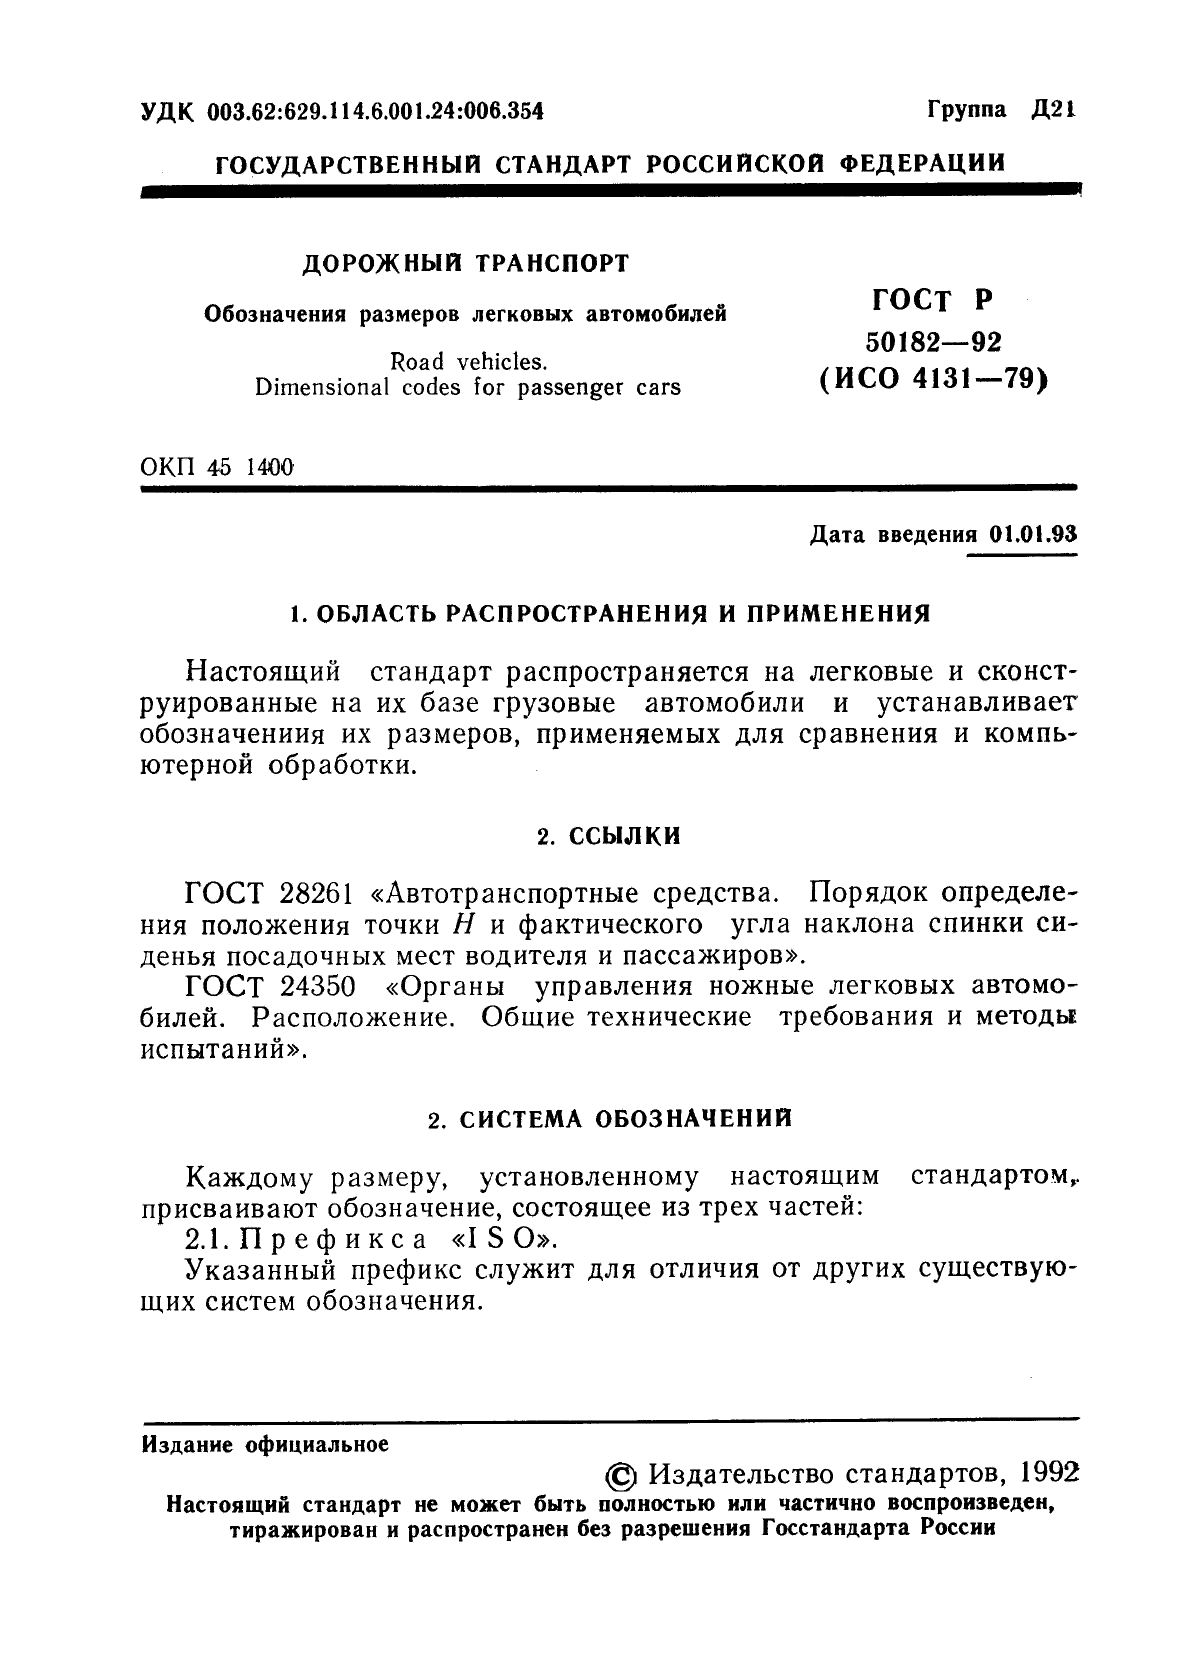 ГОСТ Р 50182-92